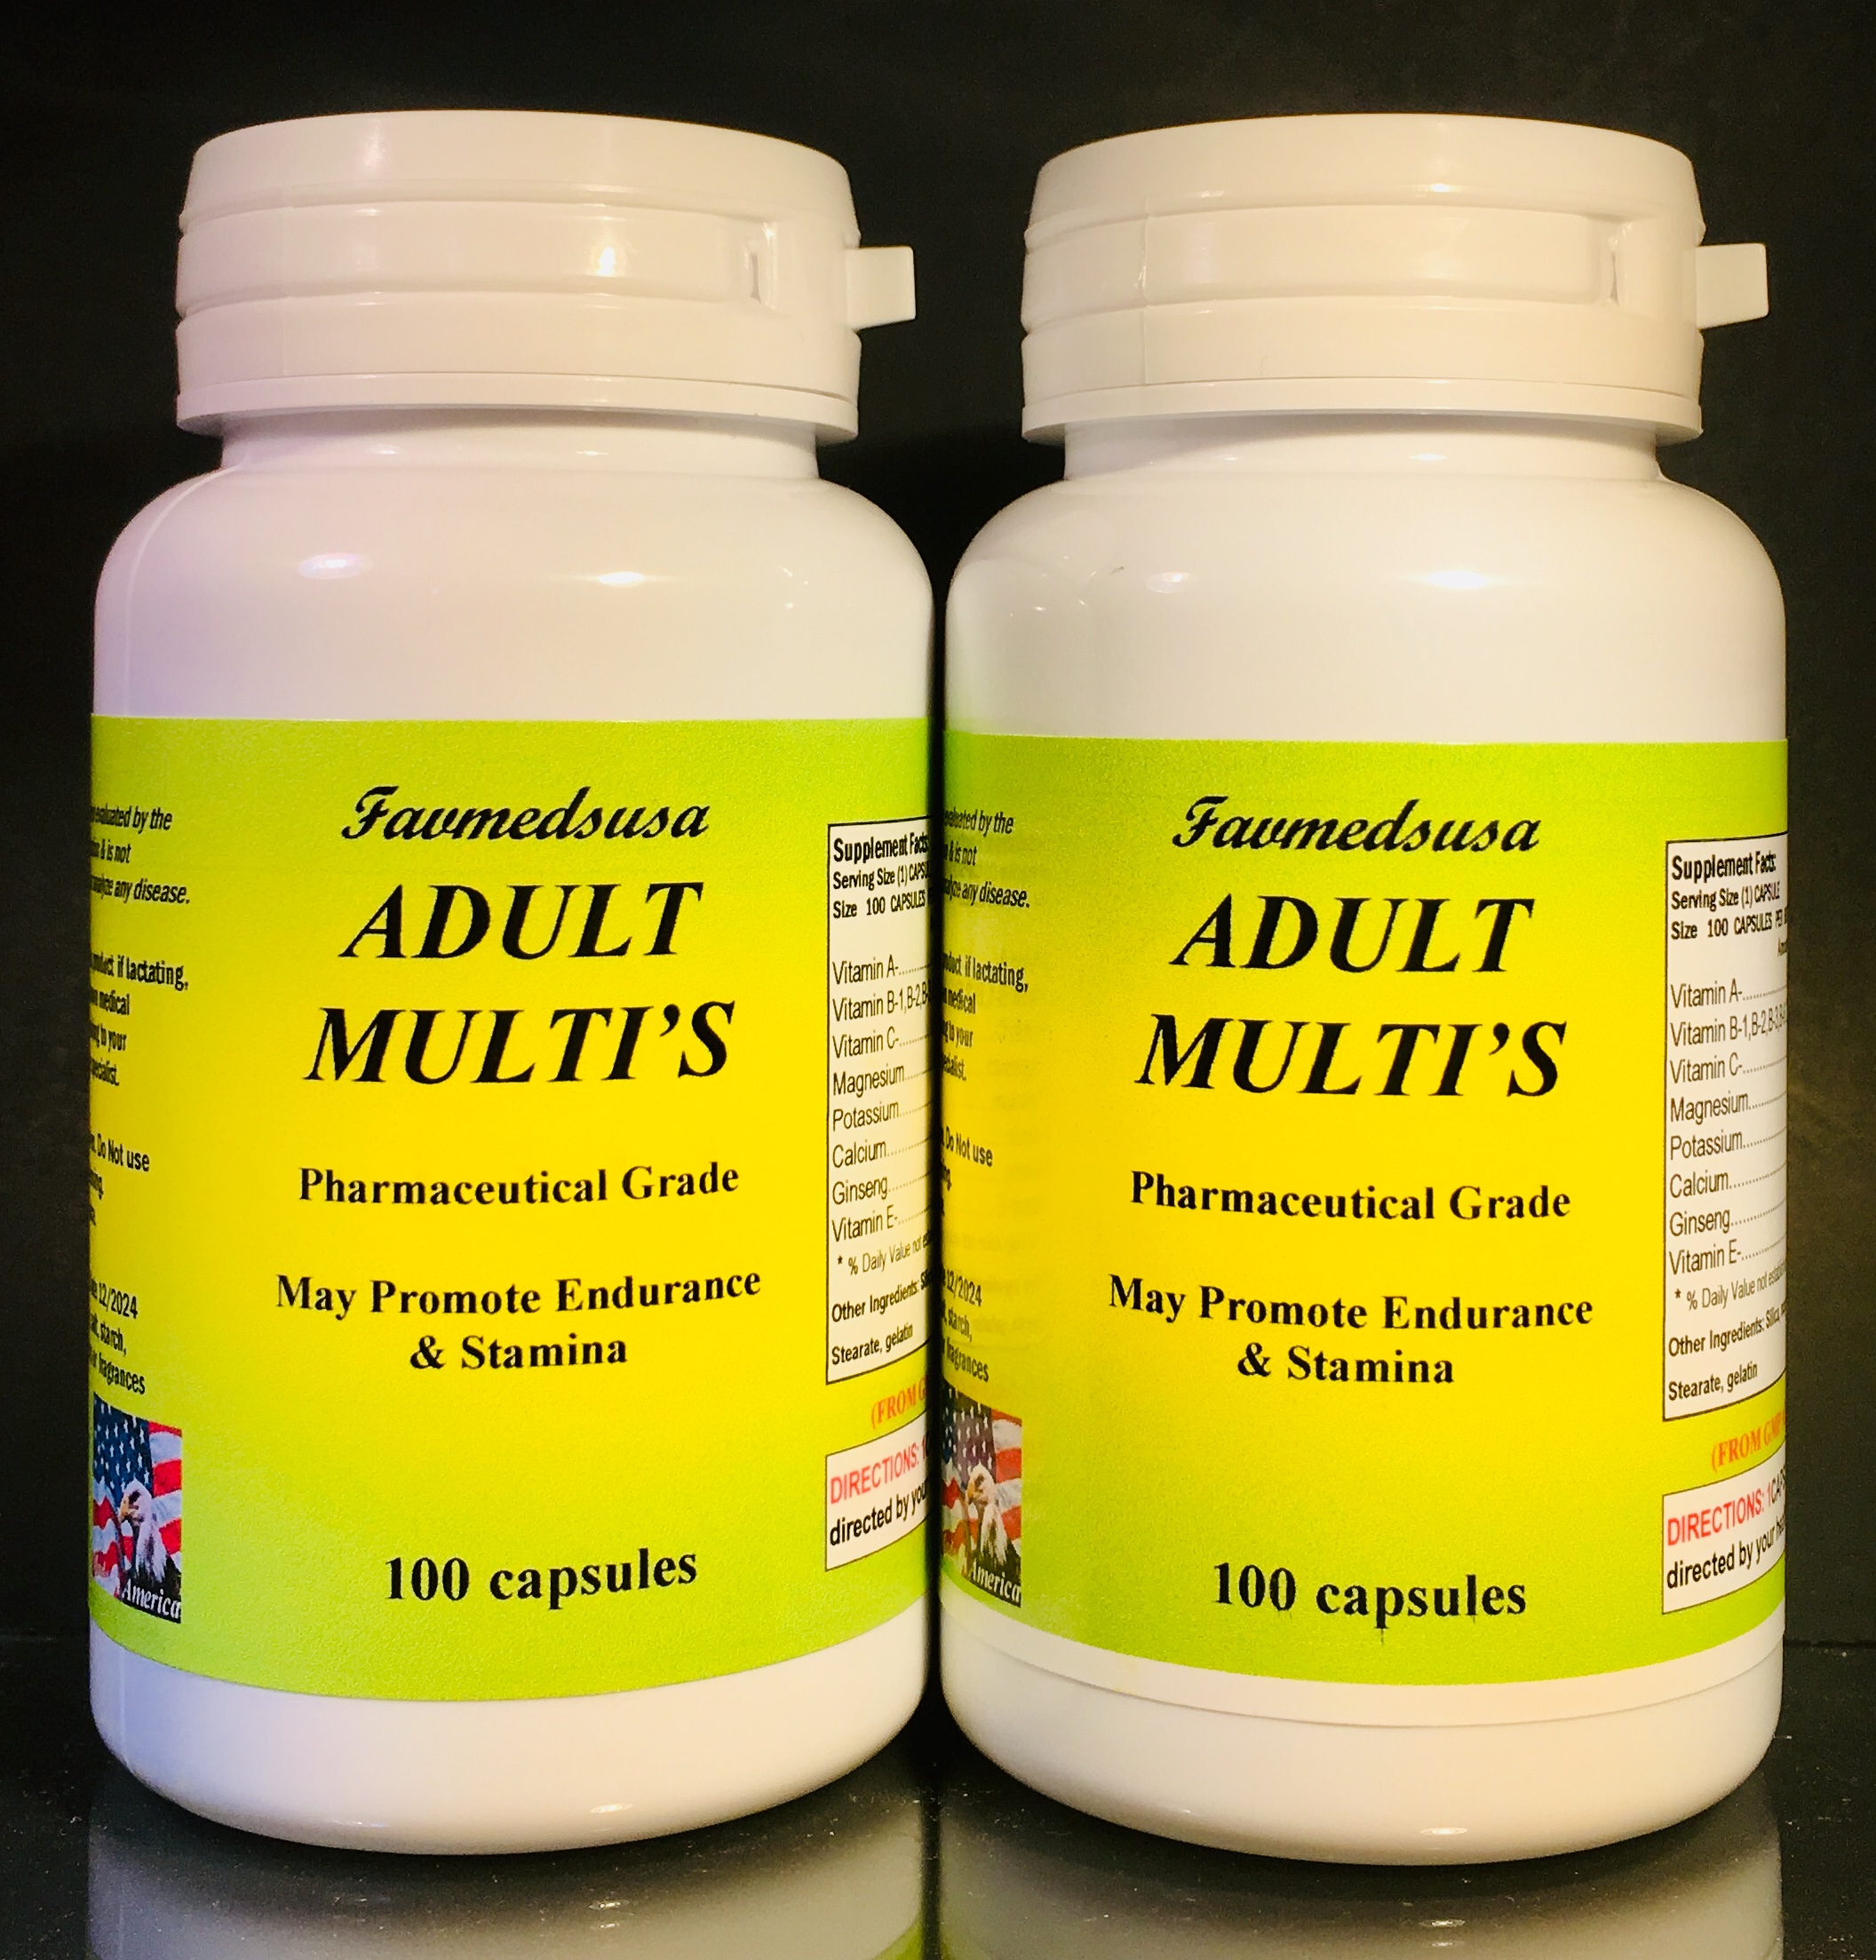 Adult multi-vitamins, b complex vitamins, - 100 capsules - FavMedsUSA.com